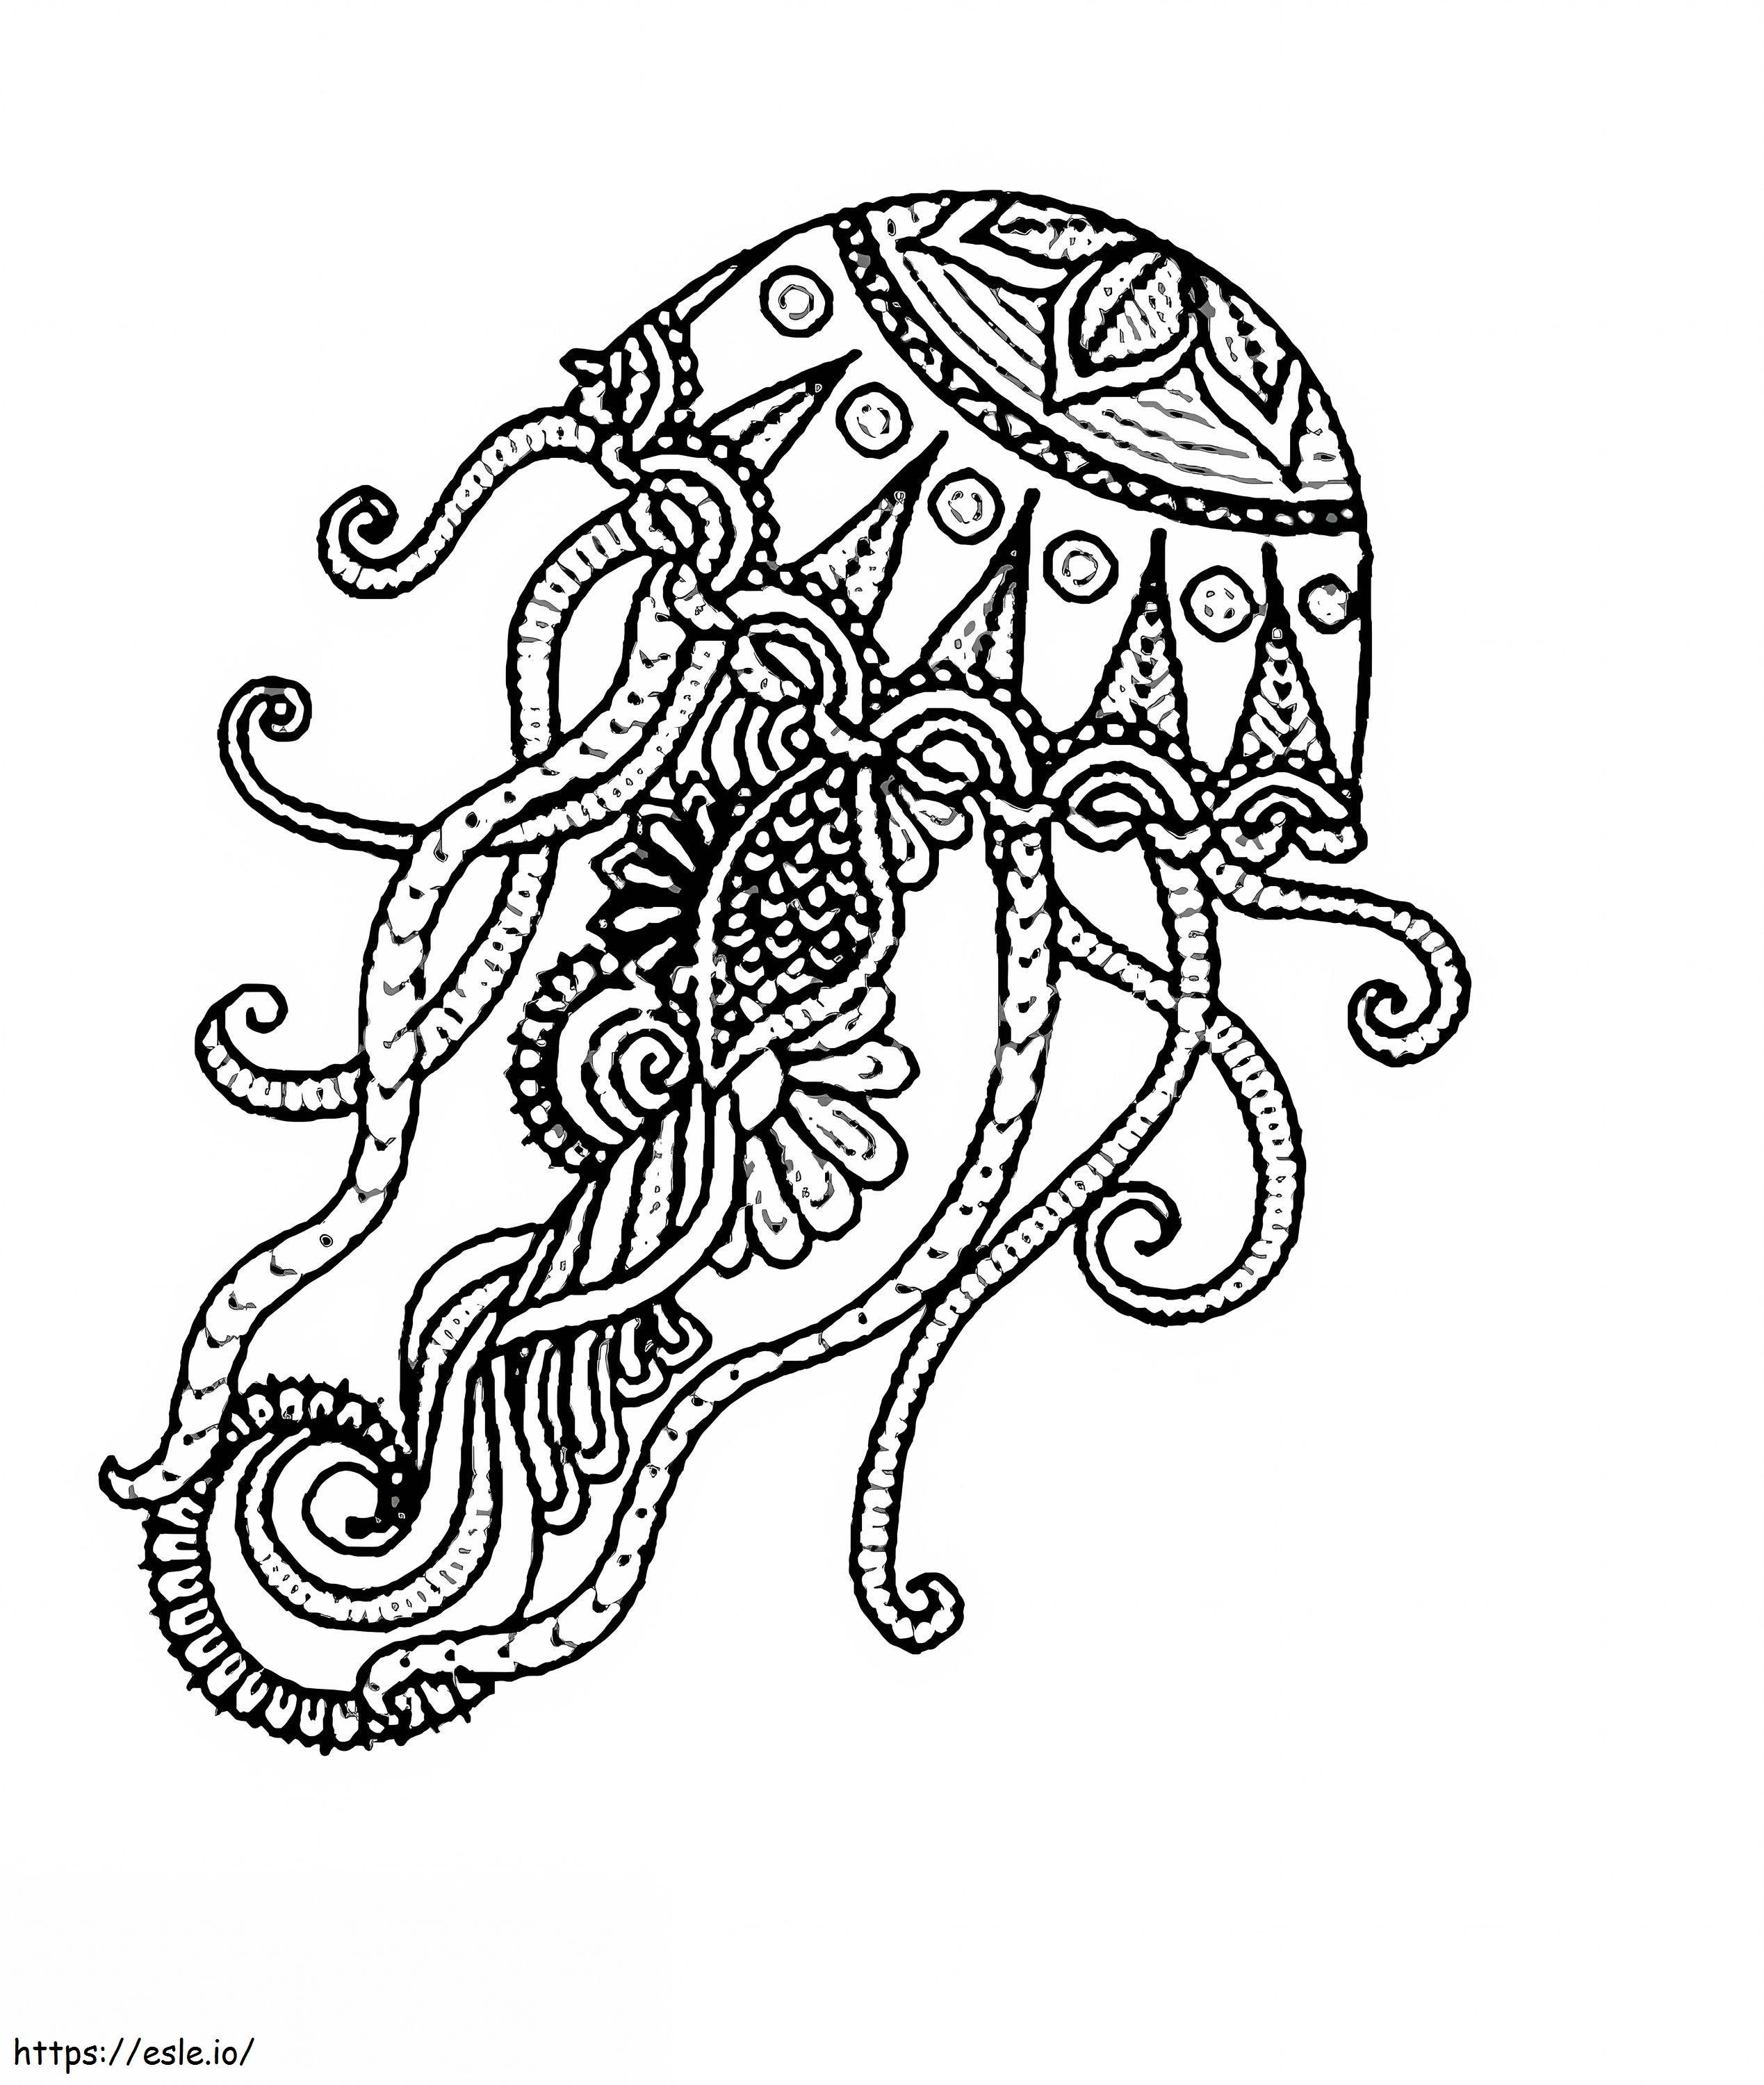 Medusas adultas para colorear